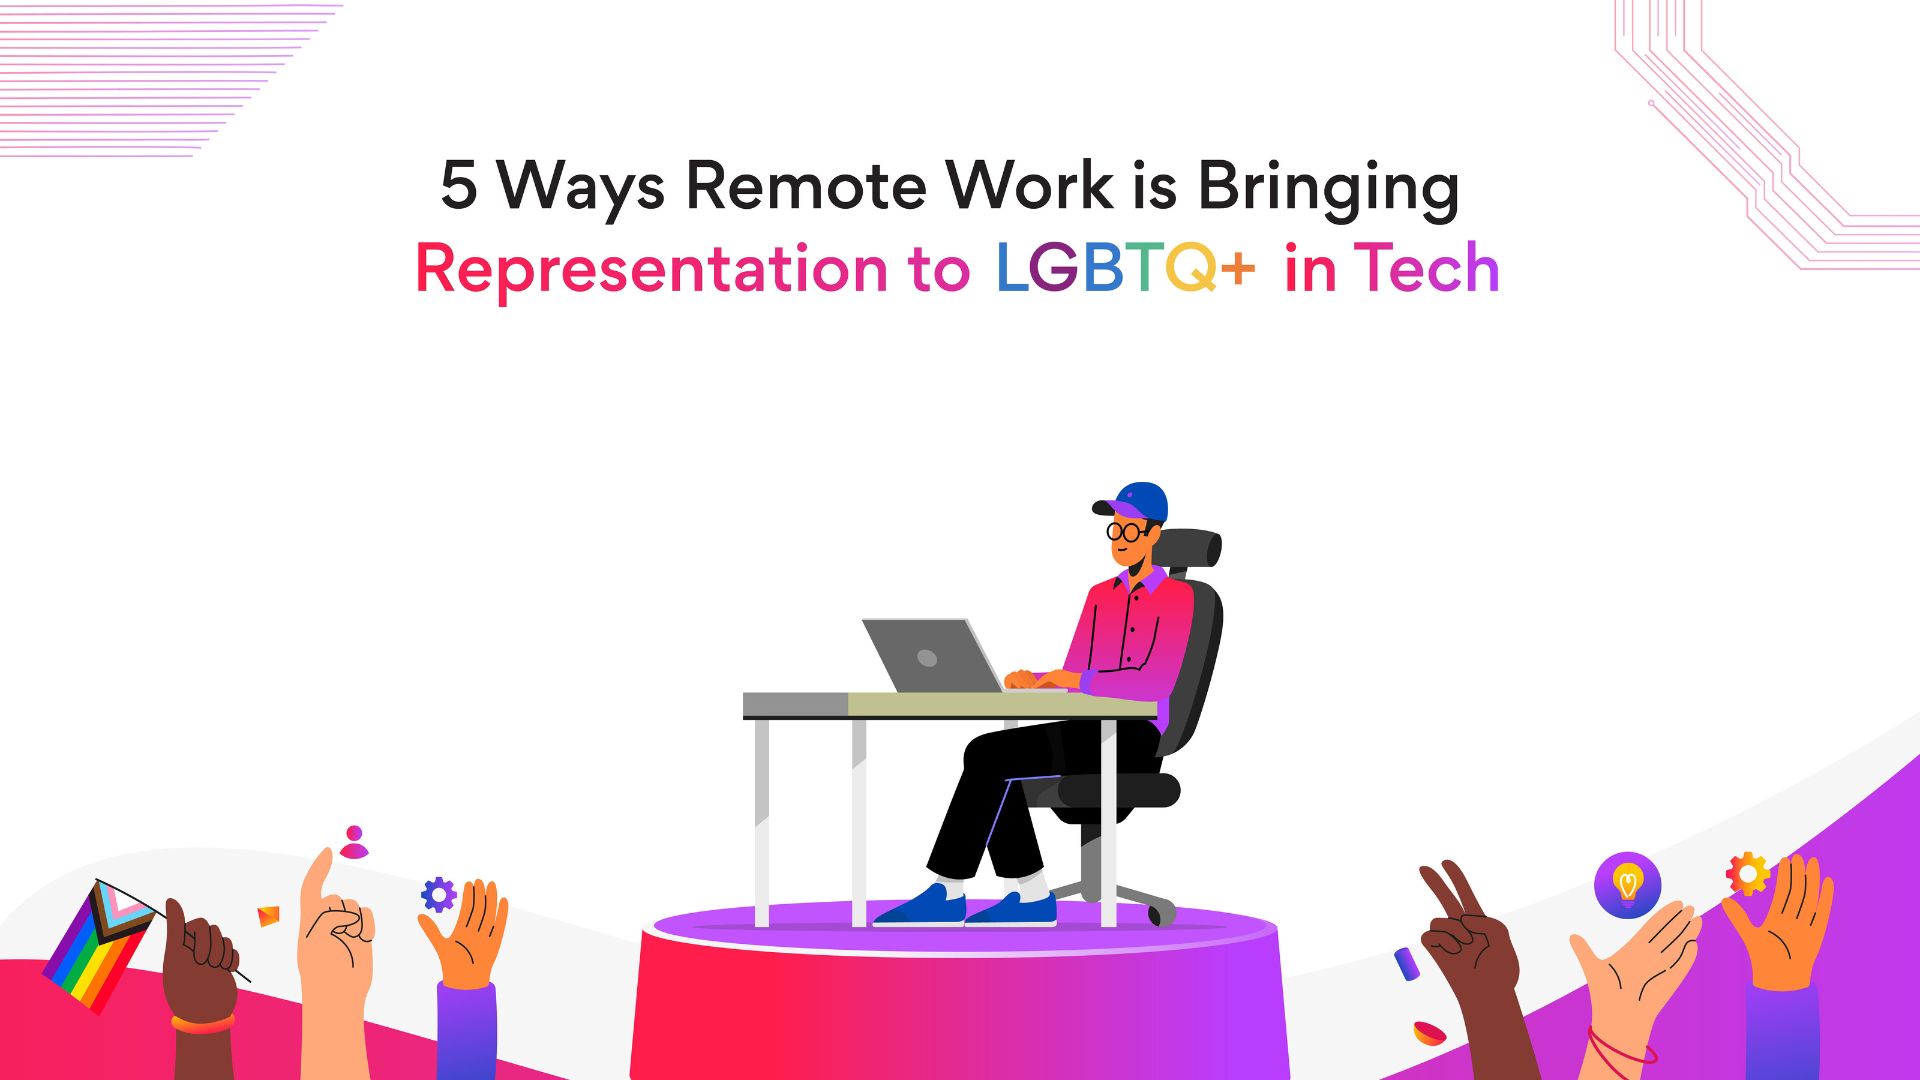 Remote work for LGBTQ+ in tech